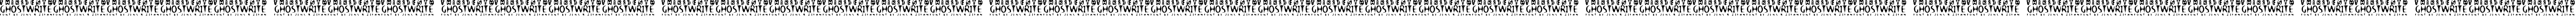 Пример написания шрифтом 13th Ghostwrite текста на русском